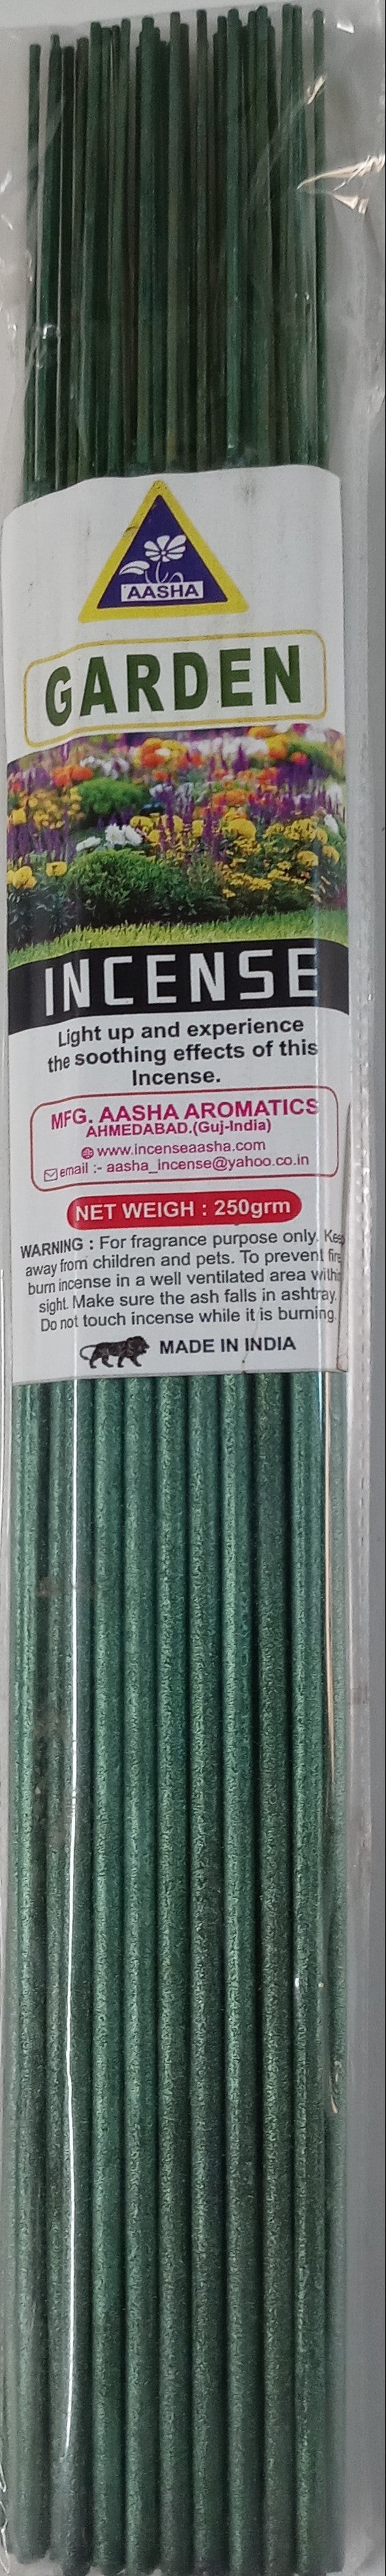 Aasha Garden Jumbo Incense Sticks -16 Inch-40 Sticks